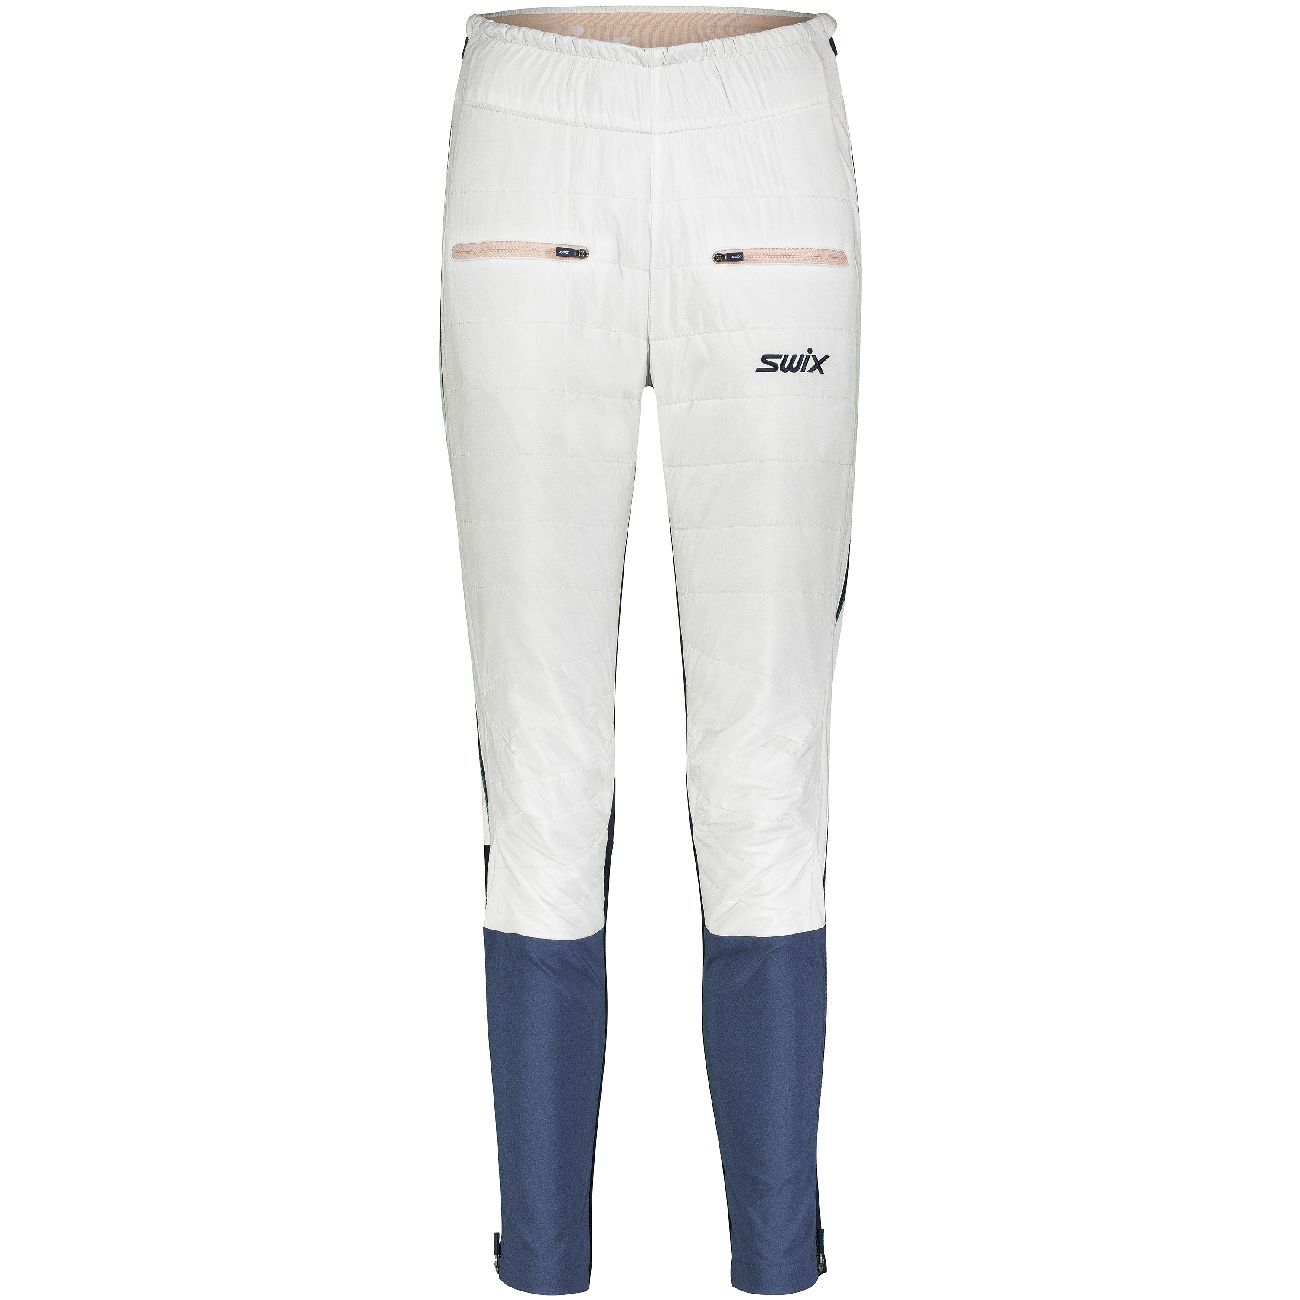 Swix Horizon Pant - Cross-country ski trousers - Women's